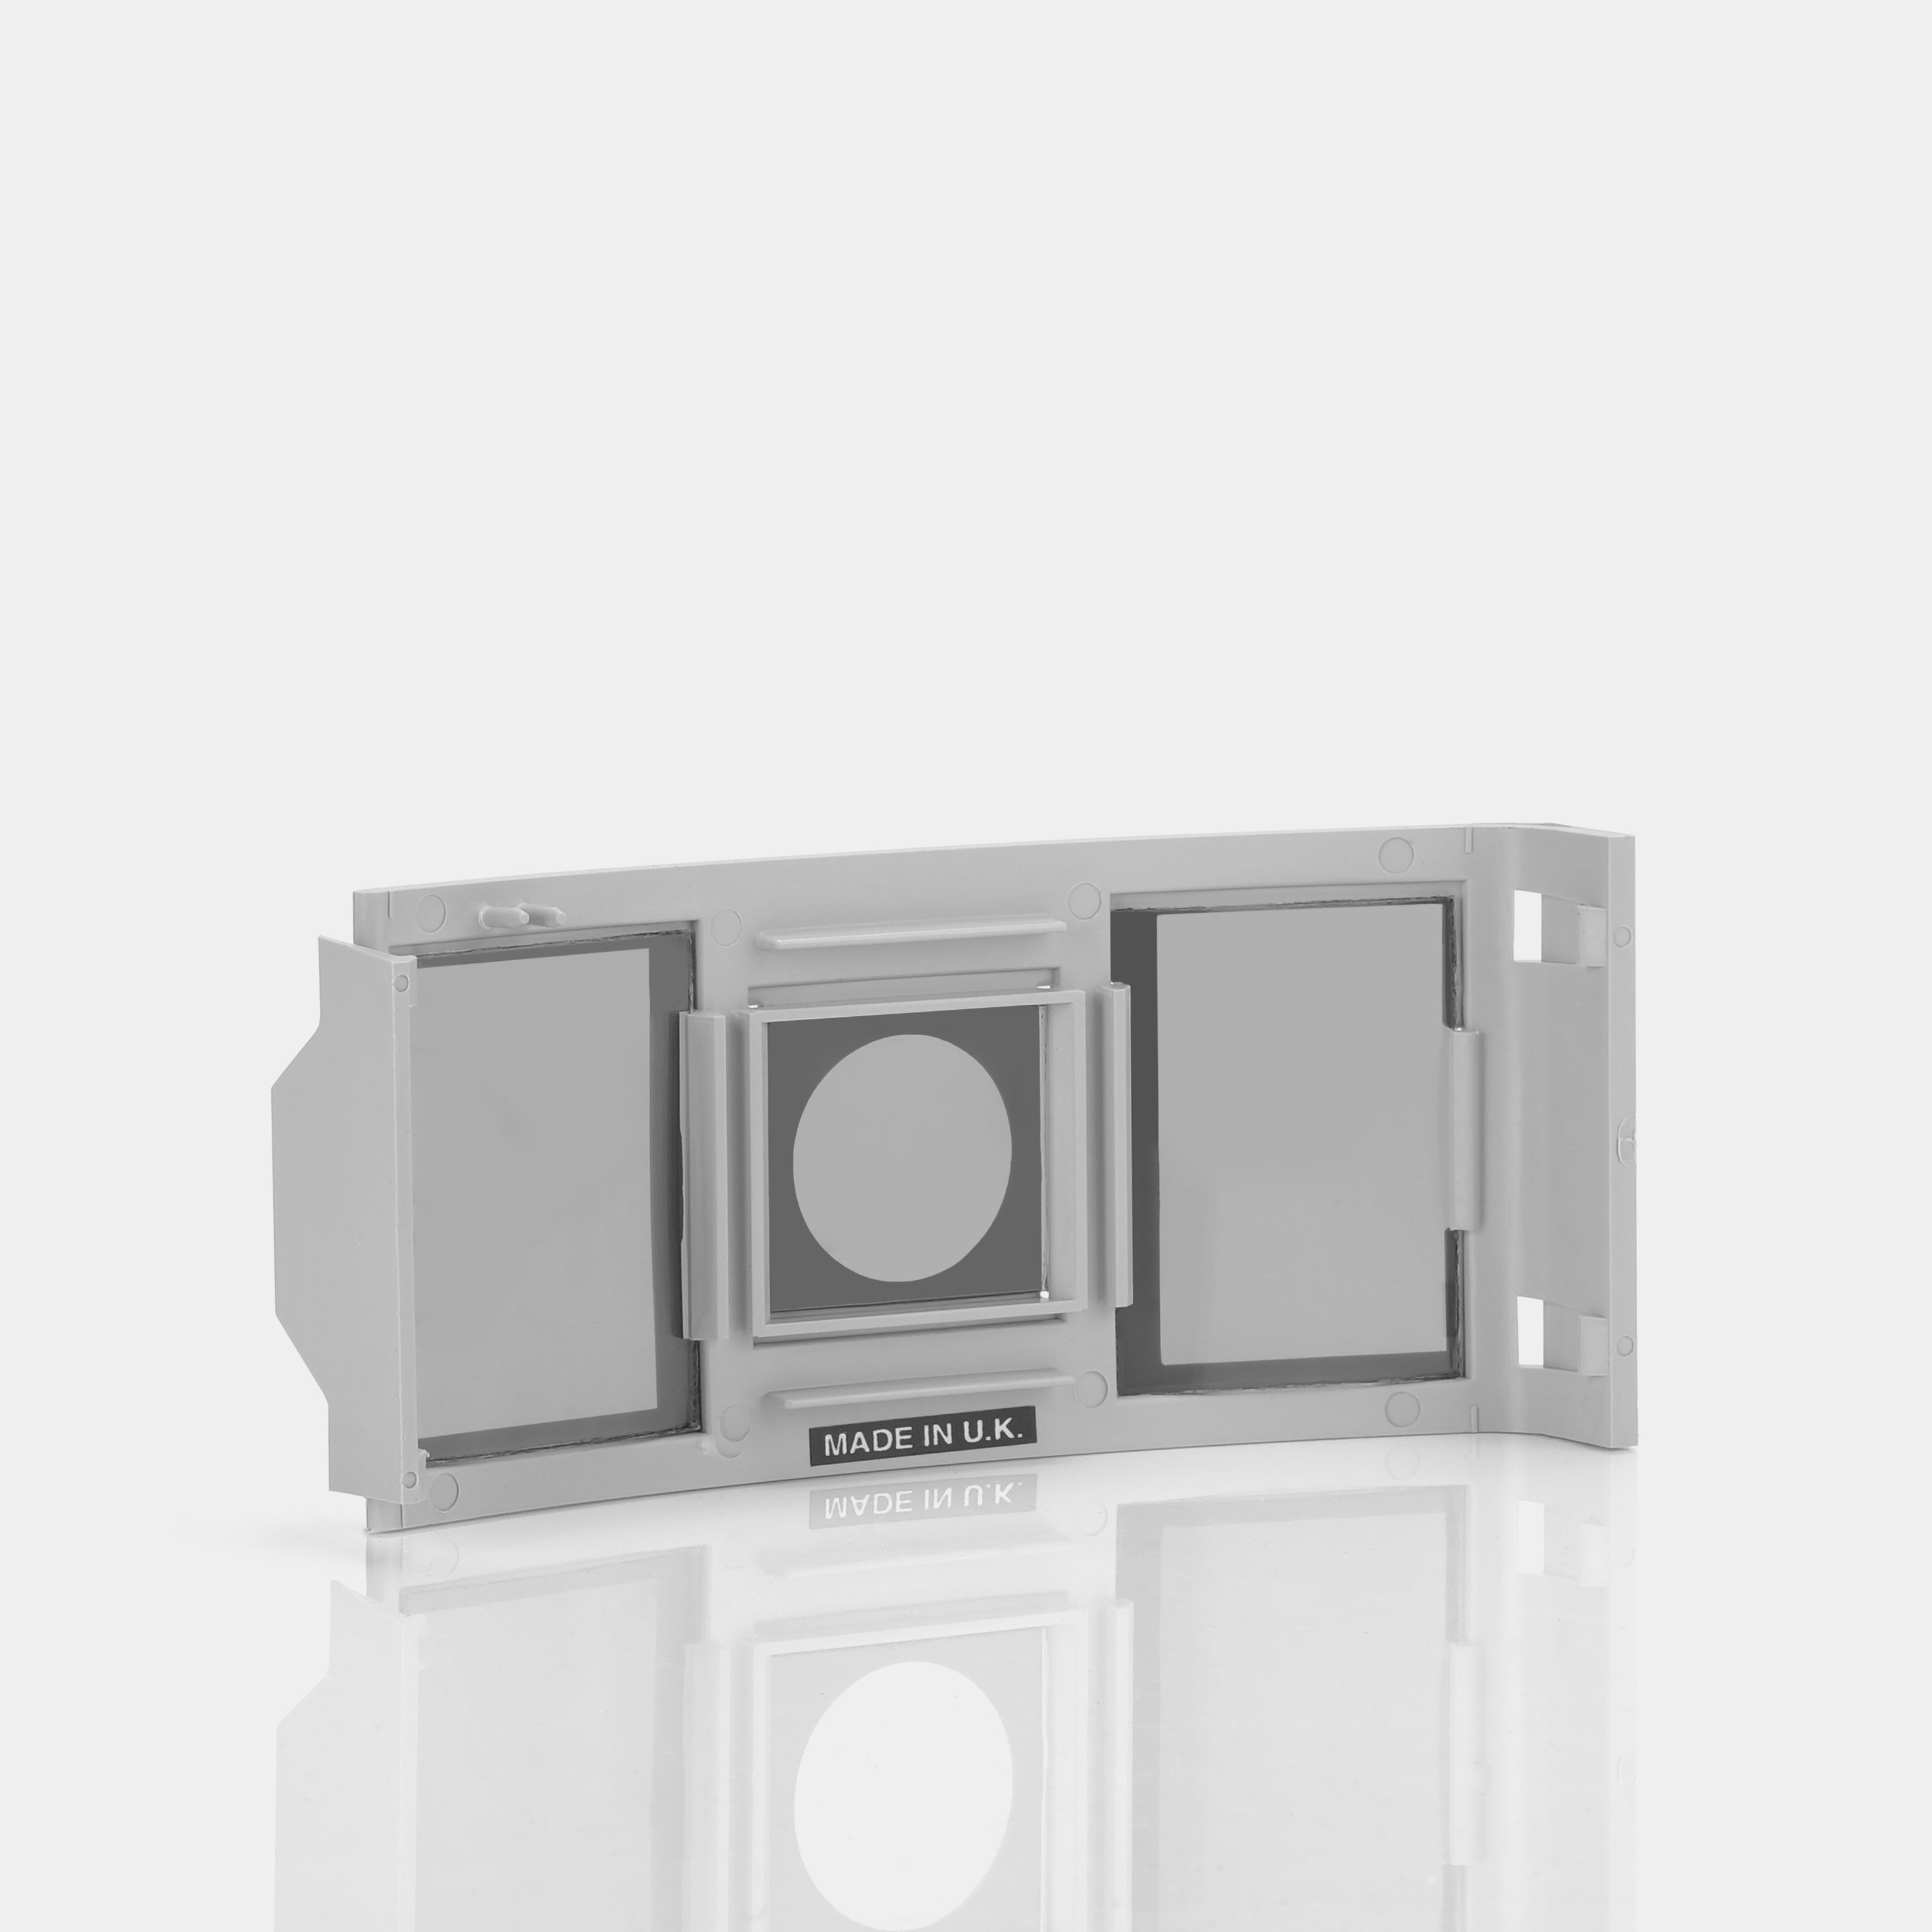 Polaroid Macro 5 SLR Polarizing Filter Attachment